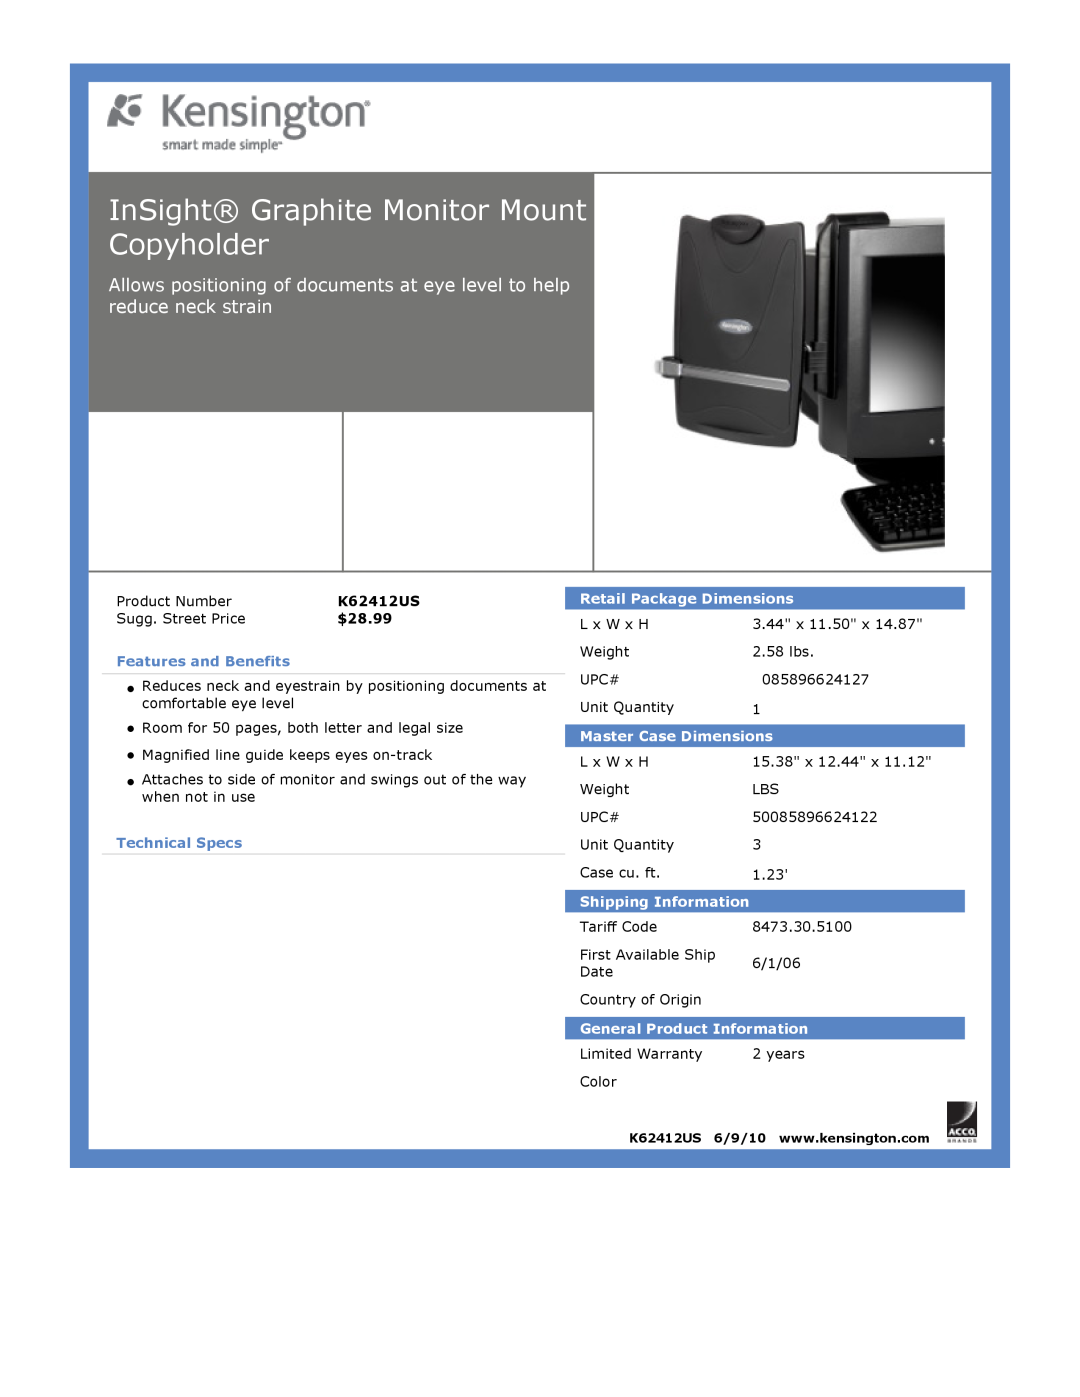 Kensington EU64325 dimensions InSight Graphite Monitor Mount Copyholder, $28.99, Features and Benefits, Technical Specs 